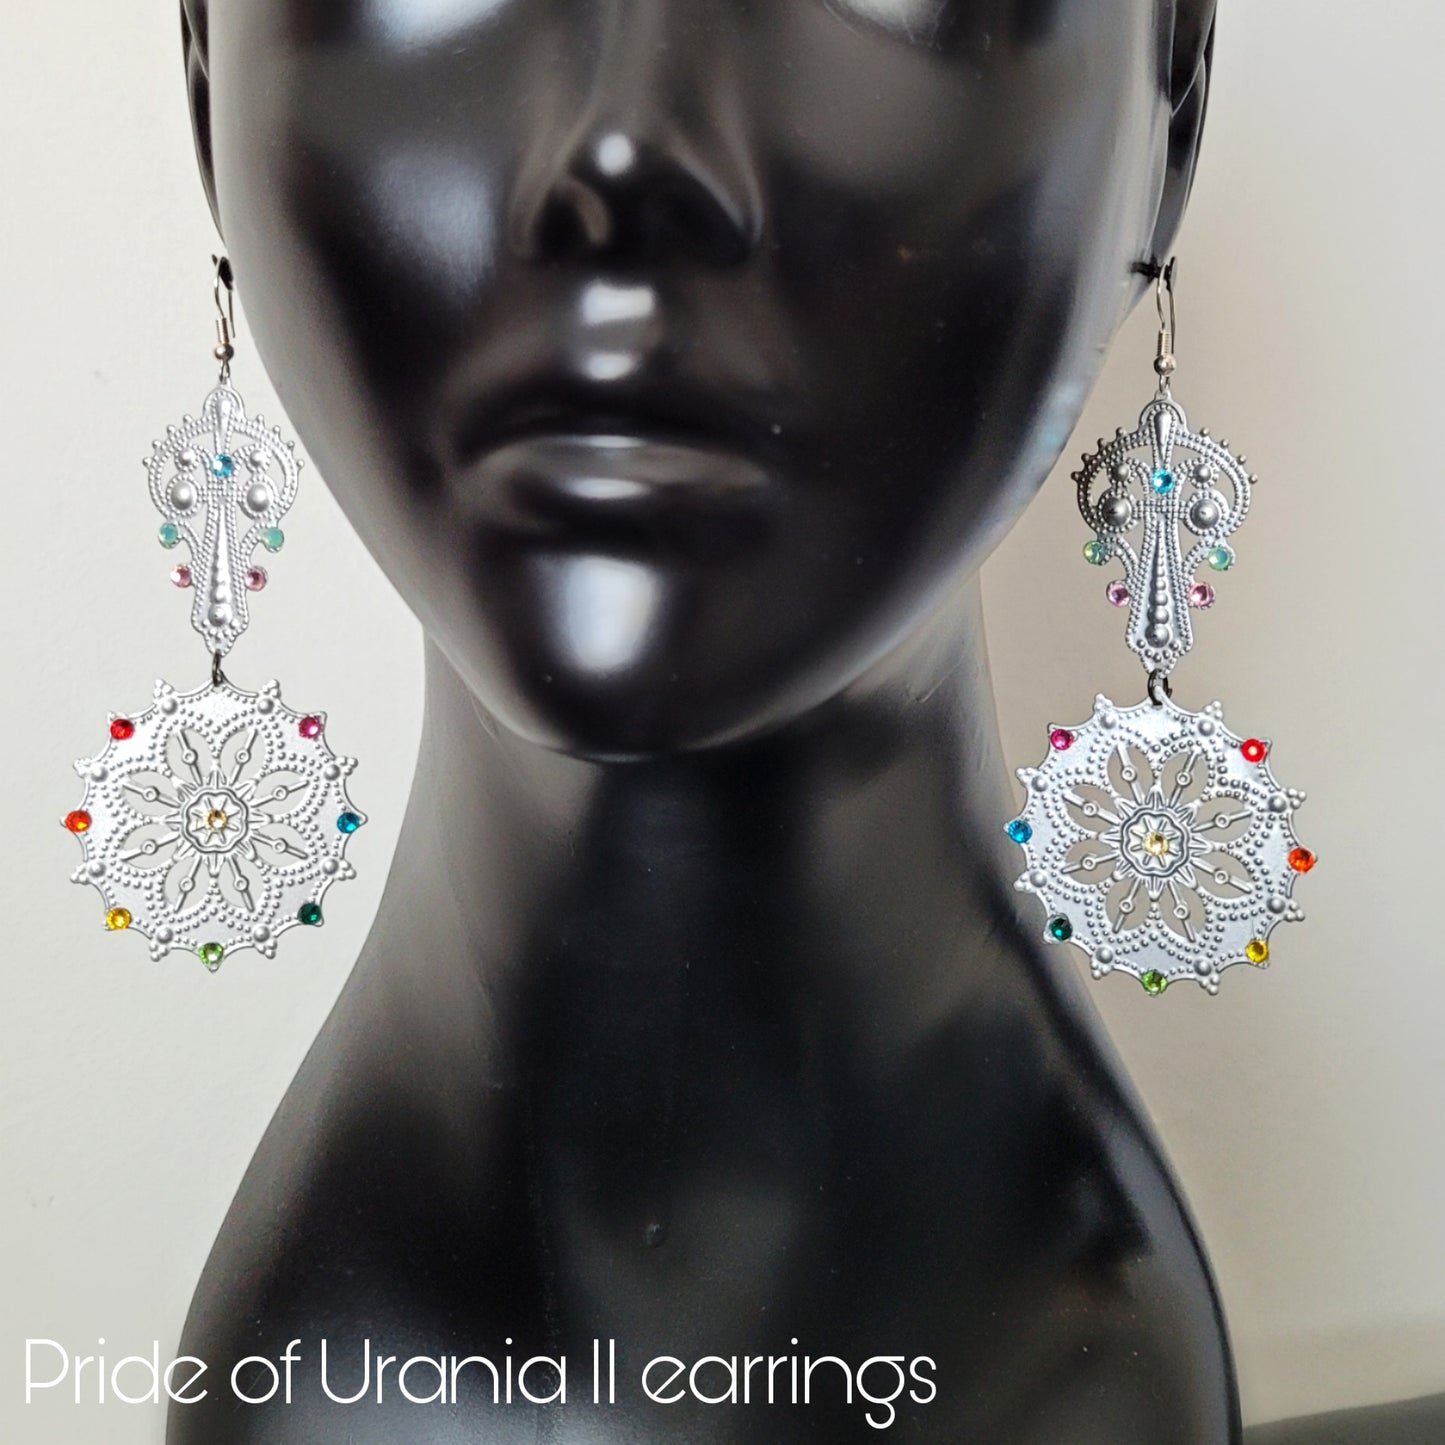 Deusa ex Machina collection: The Pride of Urania earrings